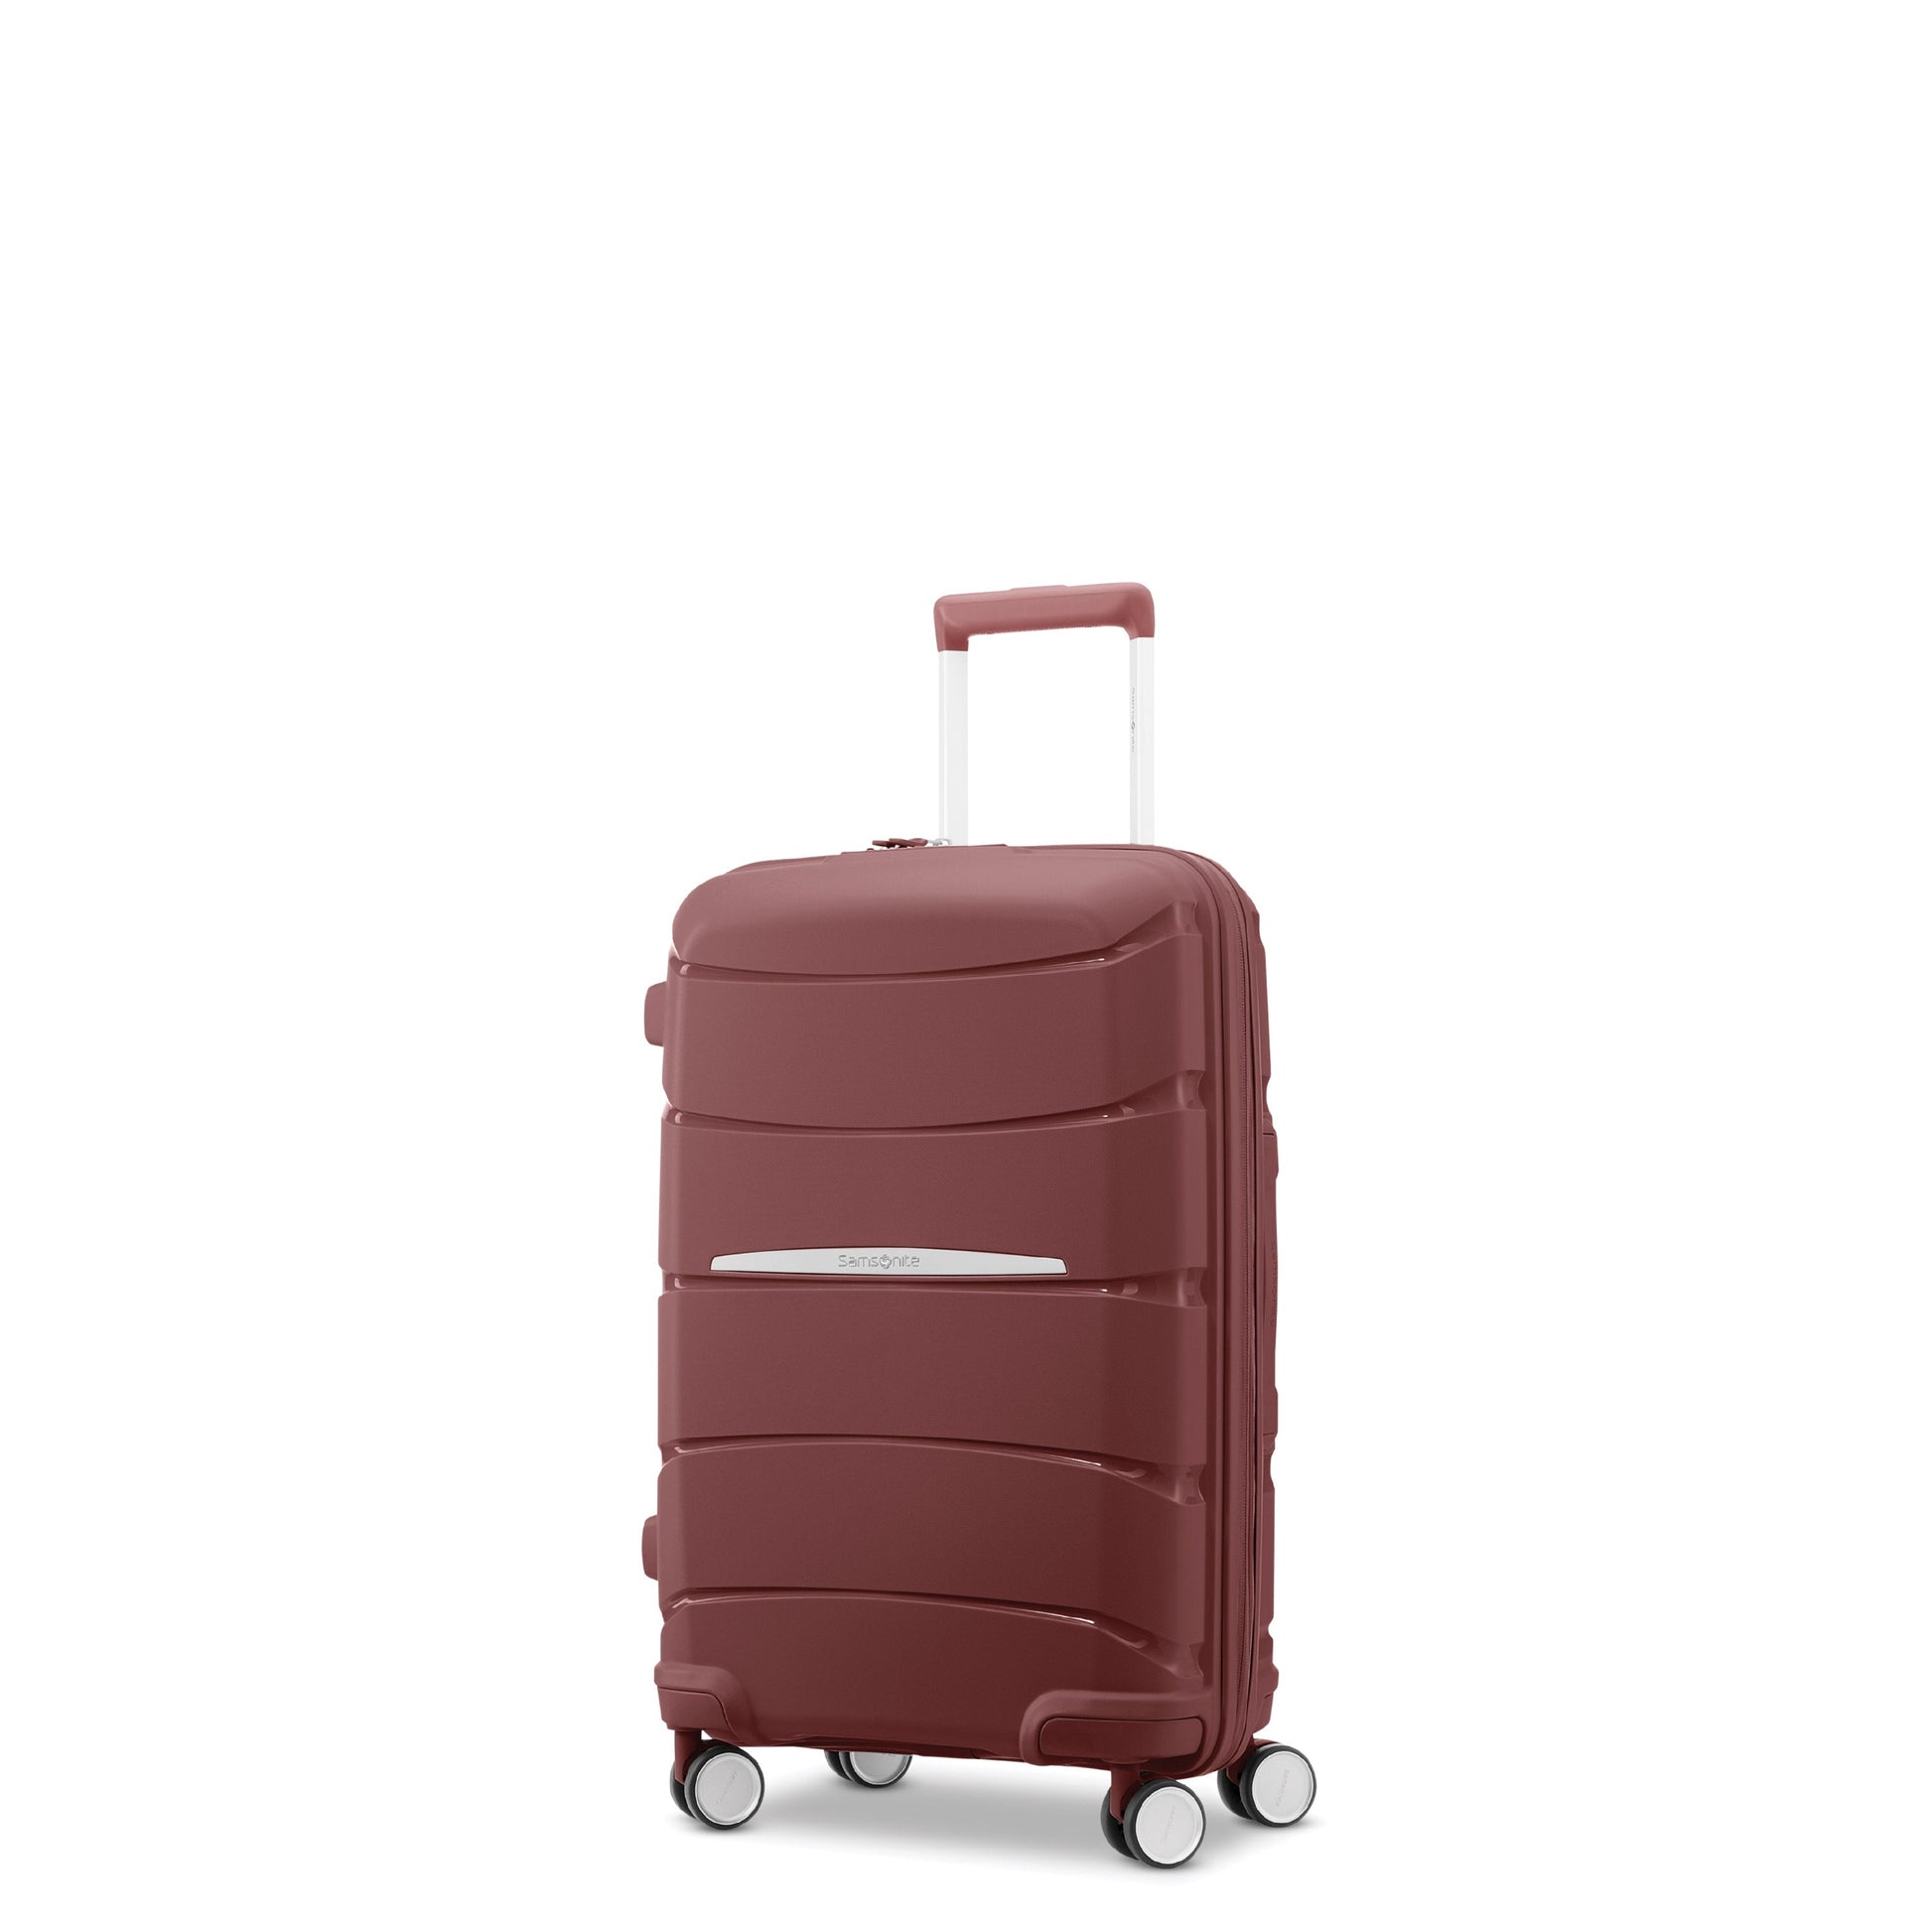 Samsonite Outline Pro Carry-On Spinner Luggage - Shiraz/Burgundy